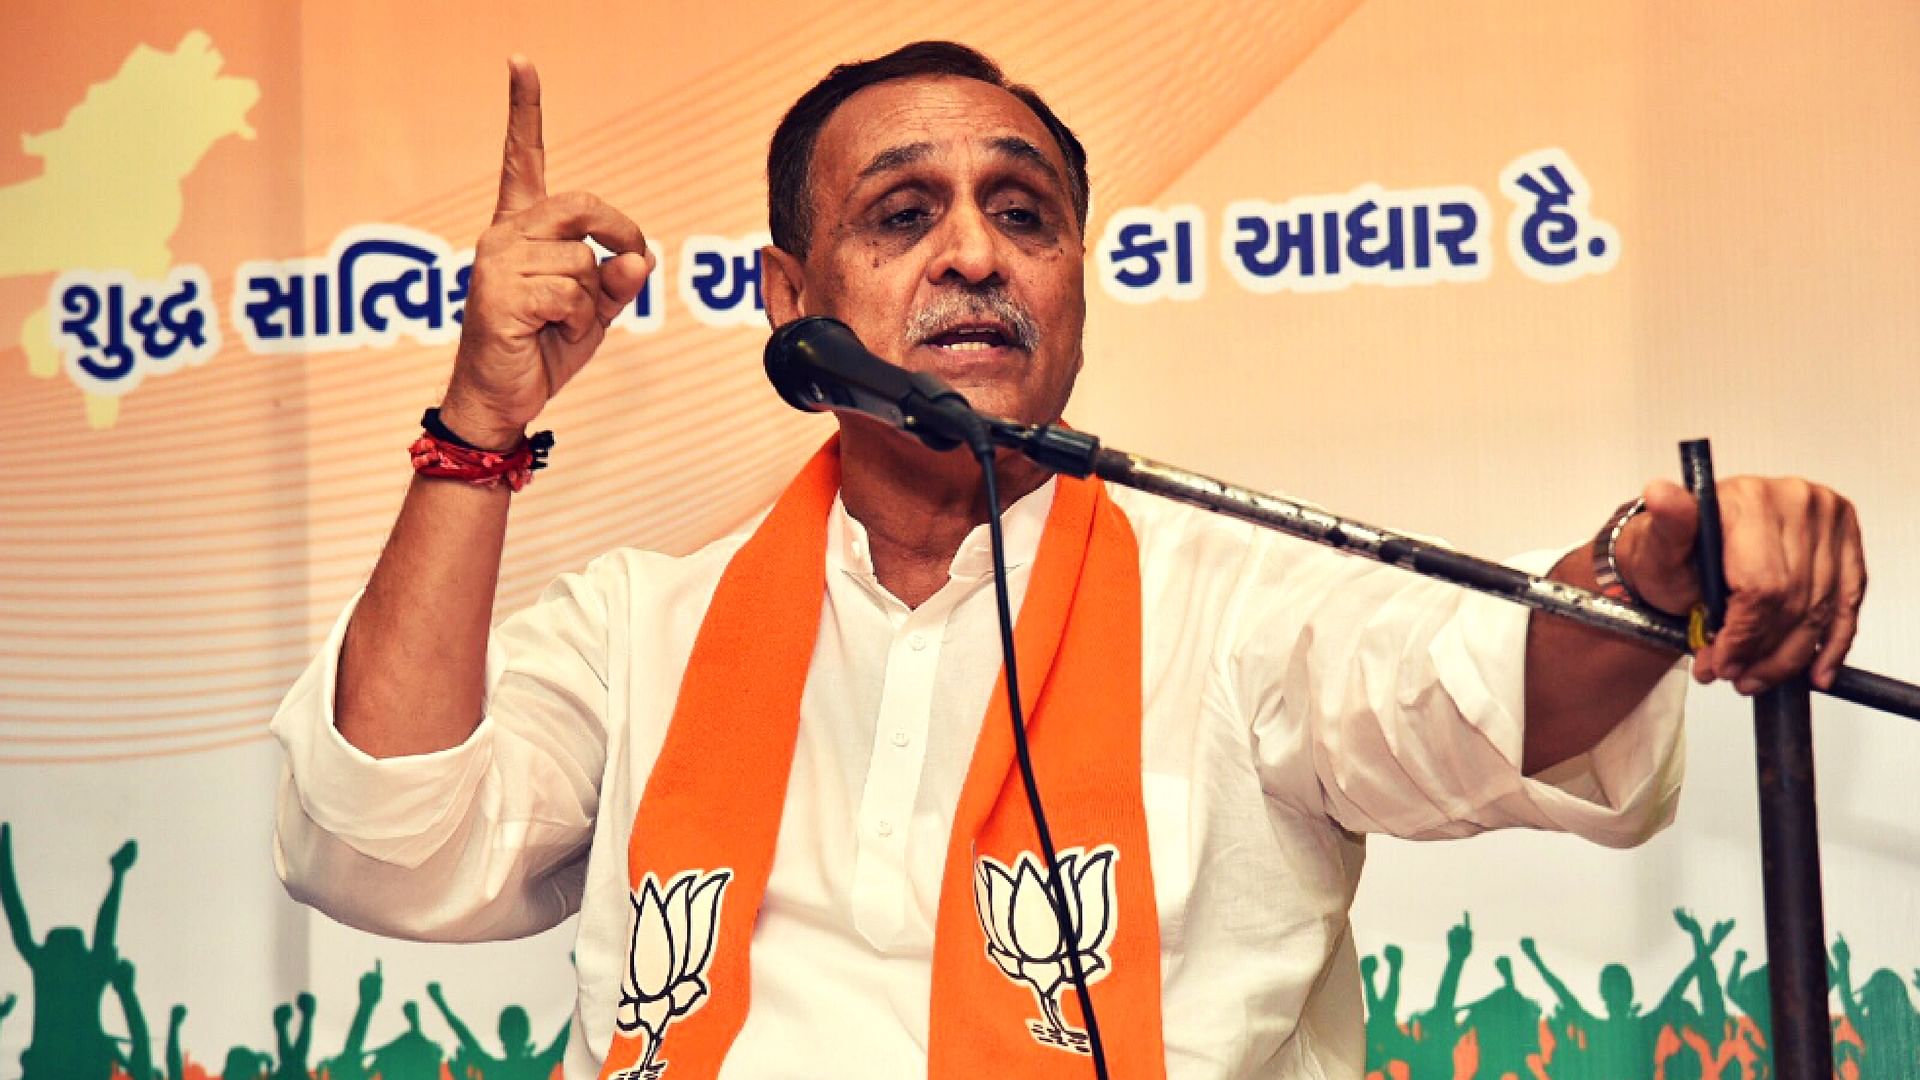 Gujarat Chief Minister Vijay Rupani on Sunday said his government was against cow vigilantism.